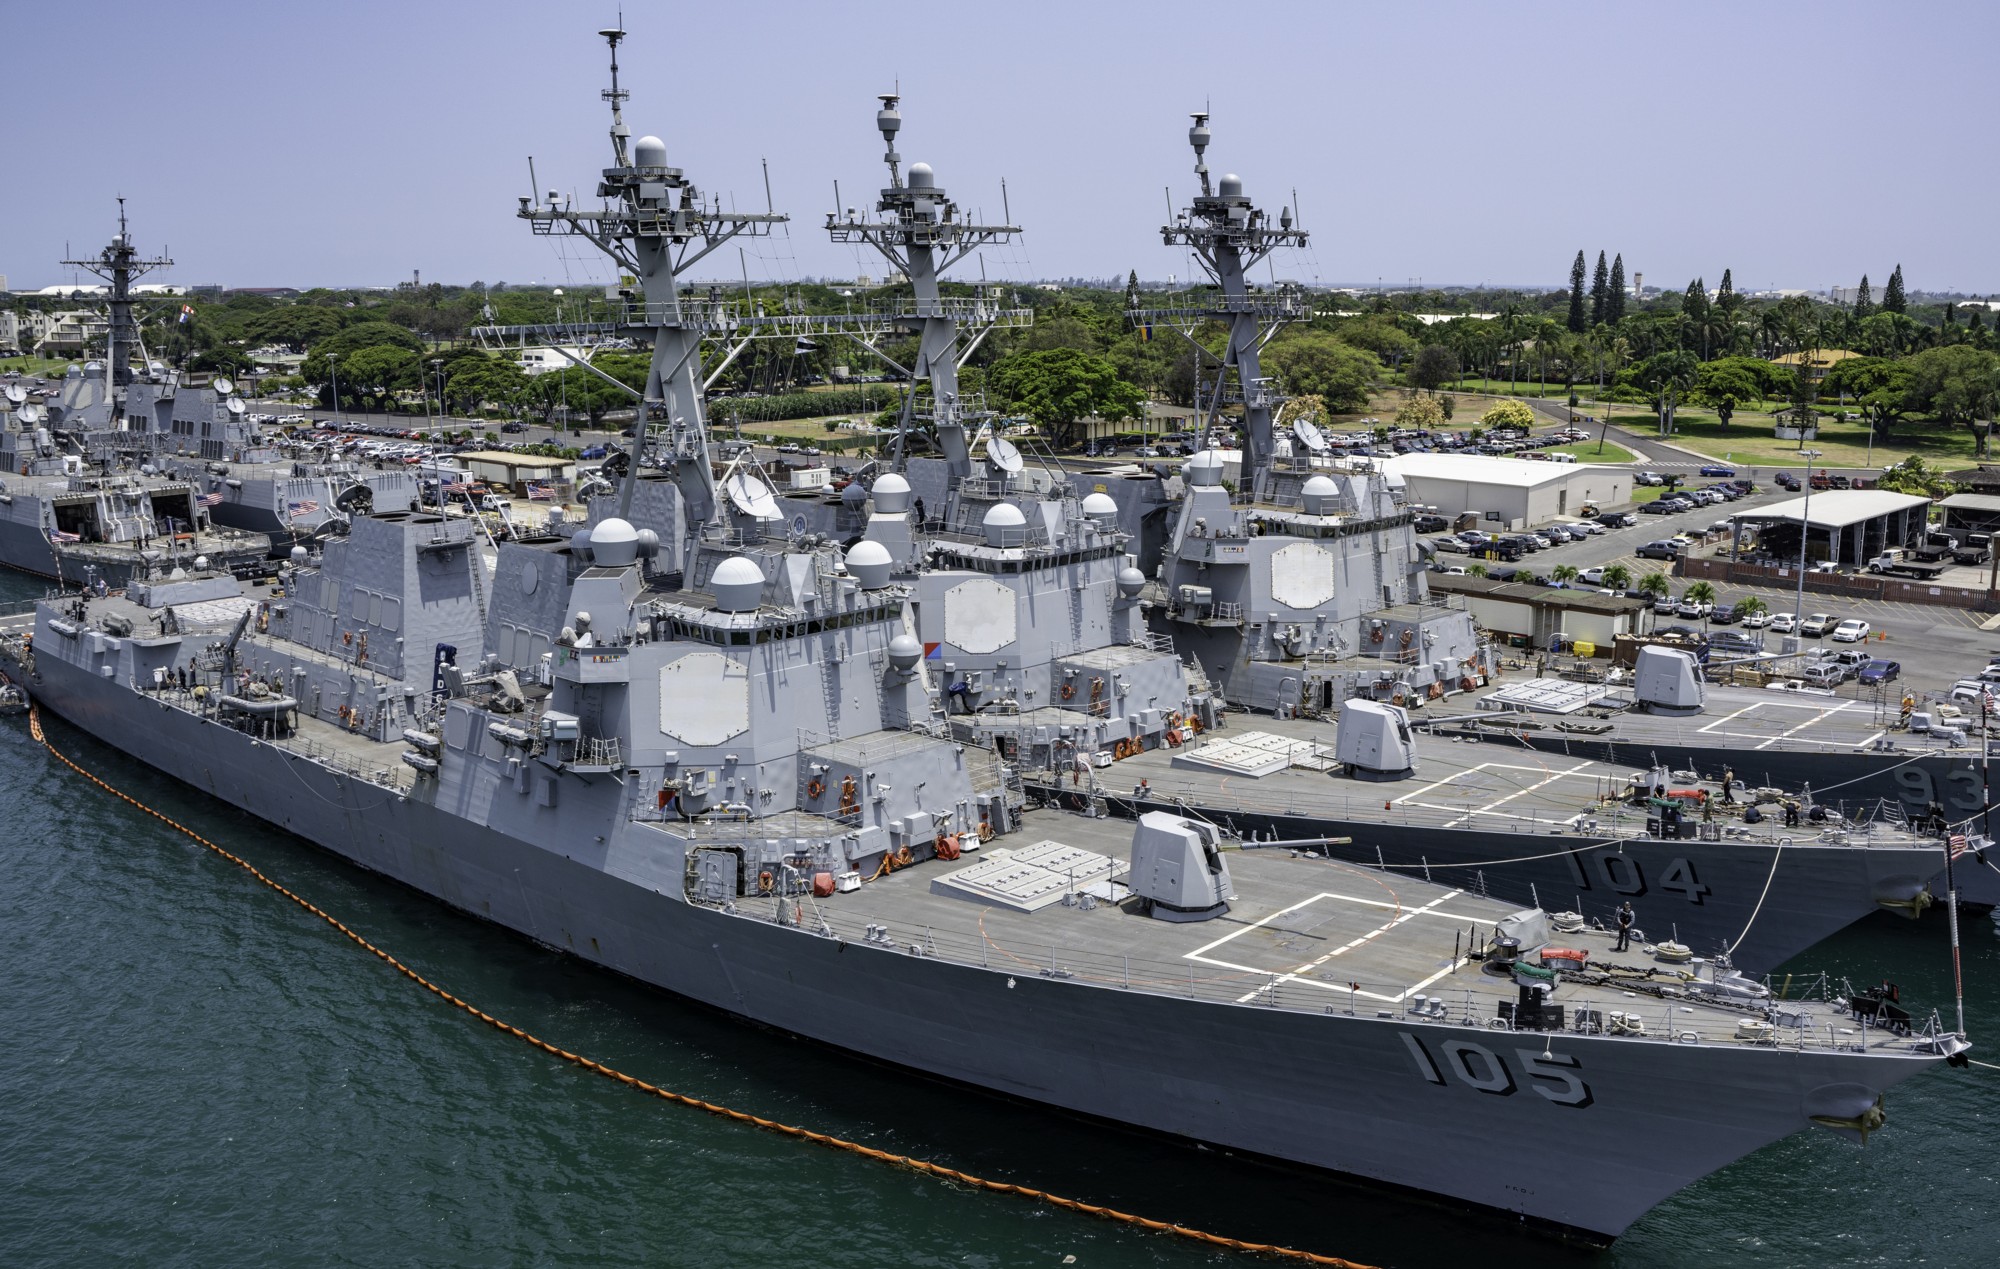 ddg-110 uss dewey arleigh burke class guided missile destroyer aegis us navy joint base pearl harbor hickam hawaii 91